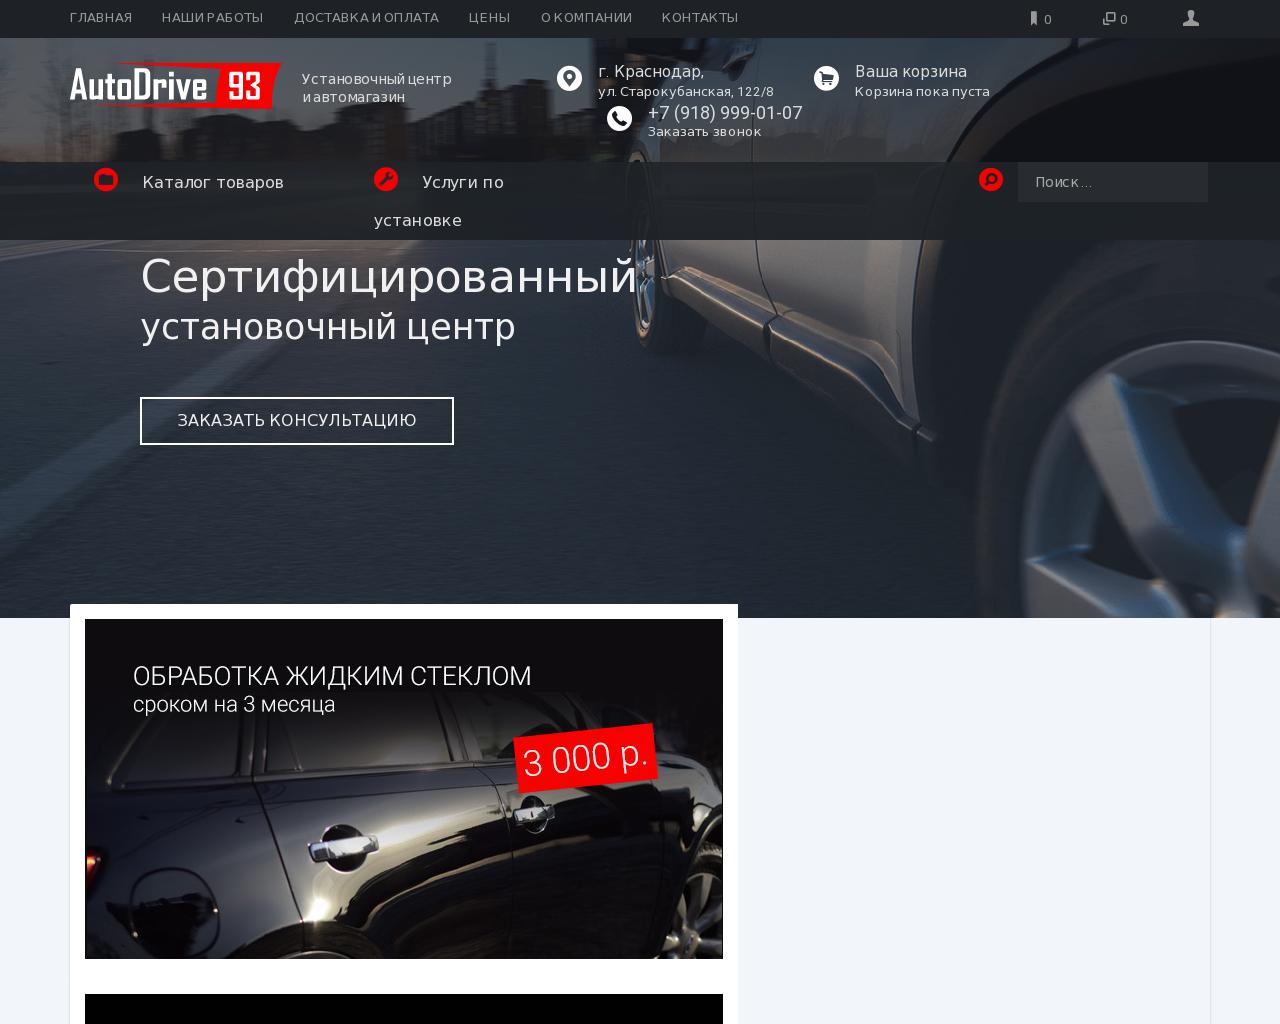 Изображение сайта autodrive93.ru в разрешении 1280x1024